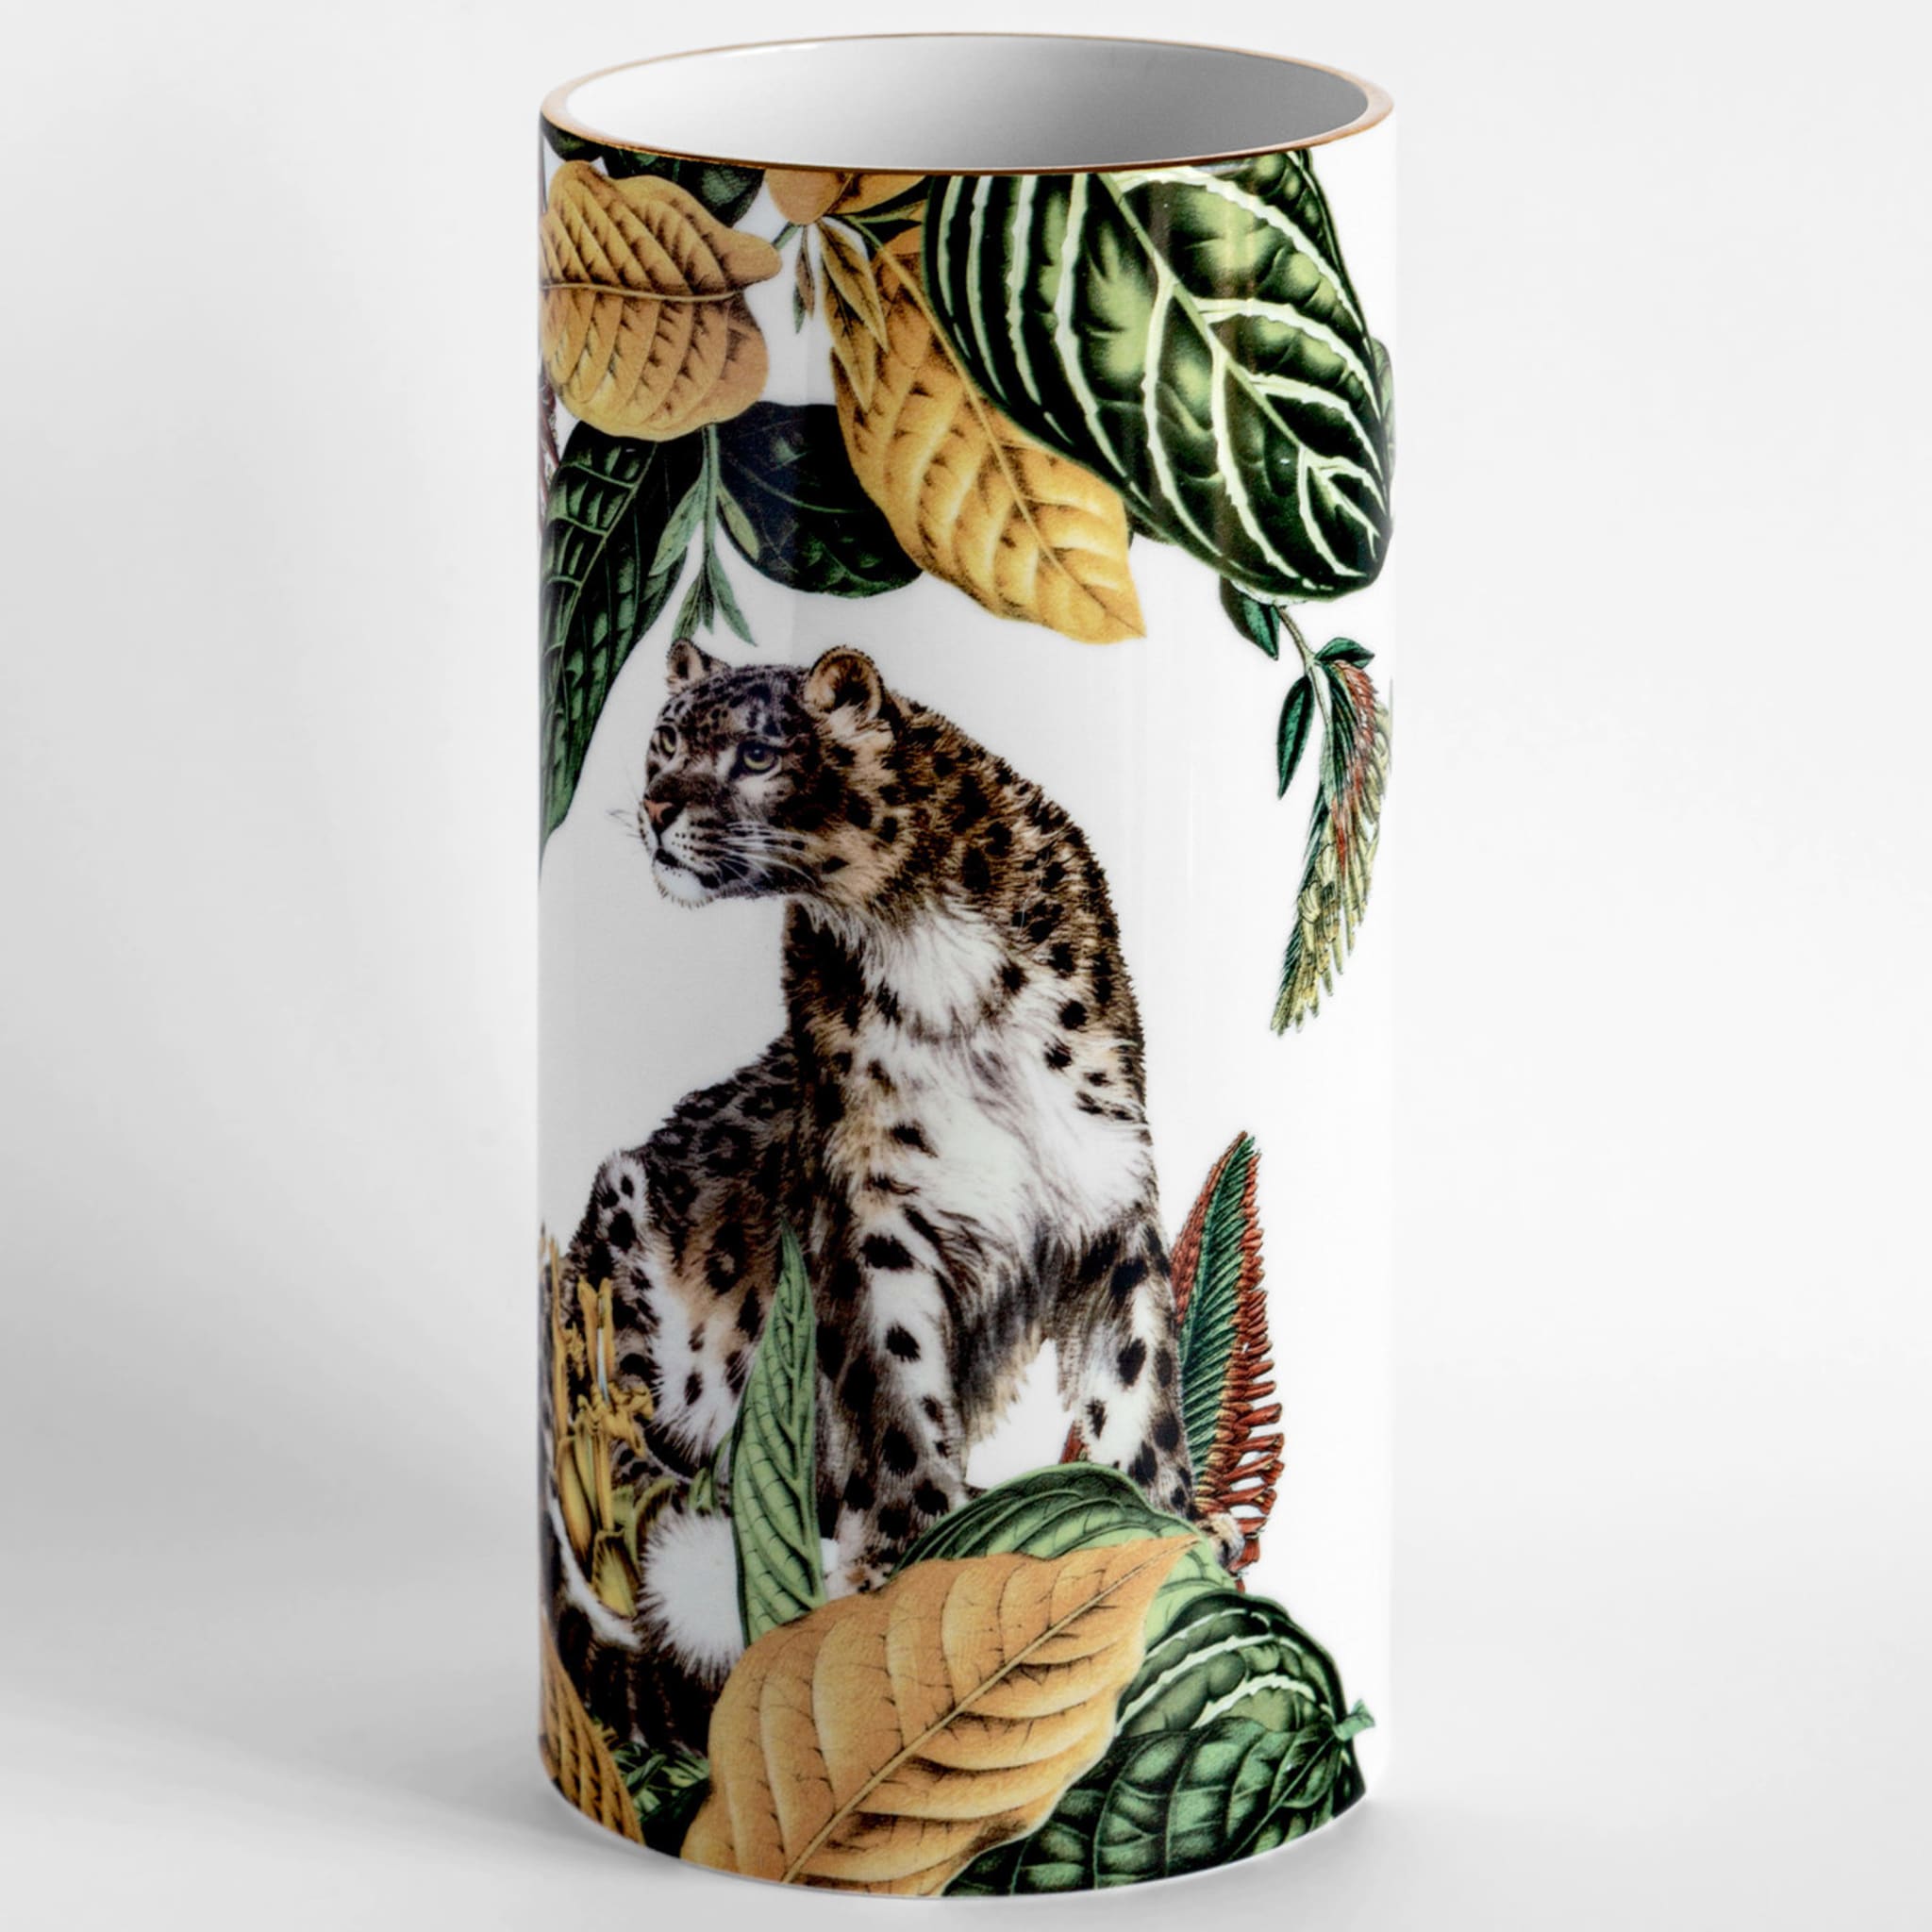 Animalia Porcelain Cylindrical Vase With Cheetah - Alternative view 1